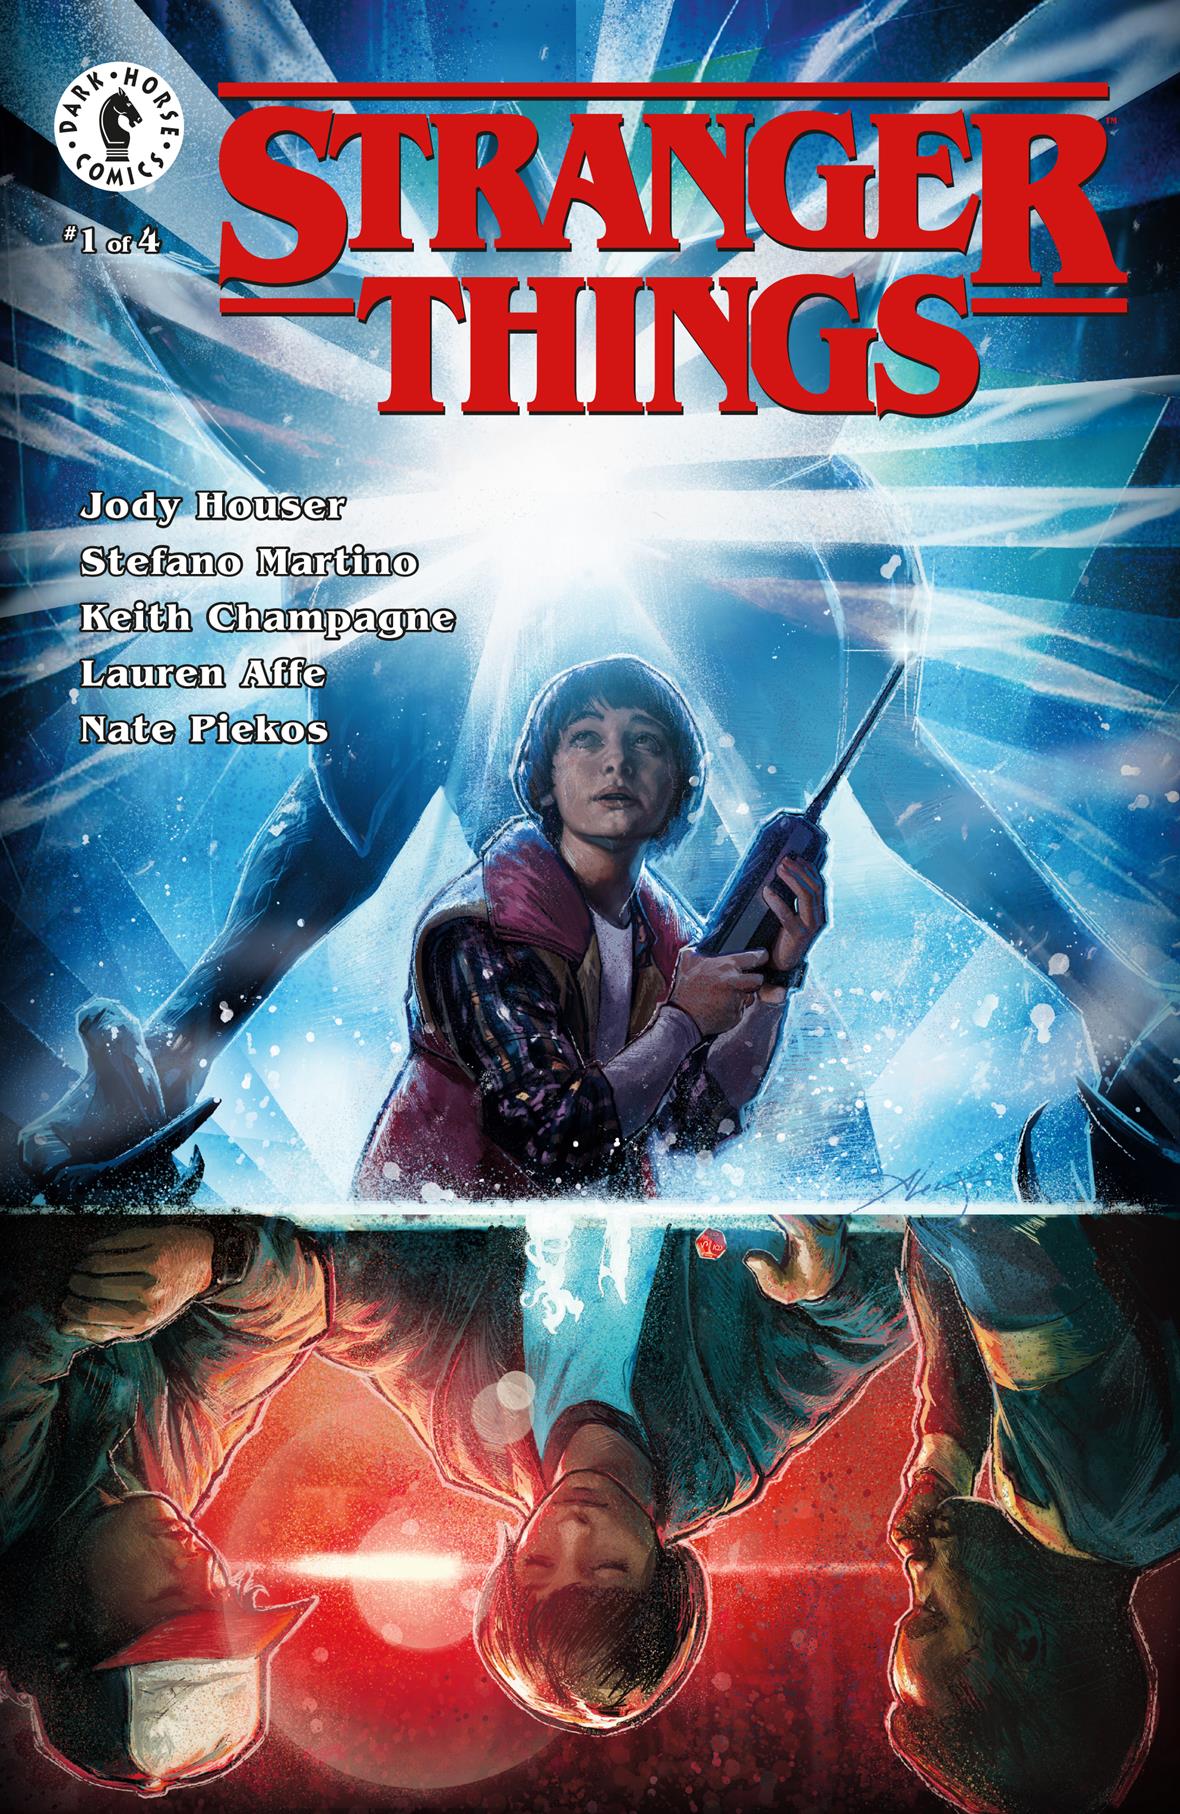 Stranger Things #1 Cover Briclot